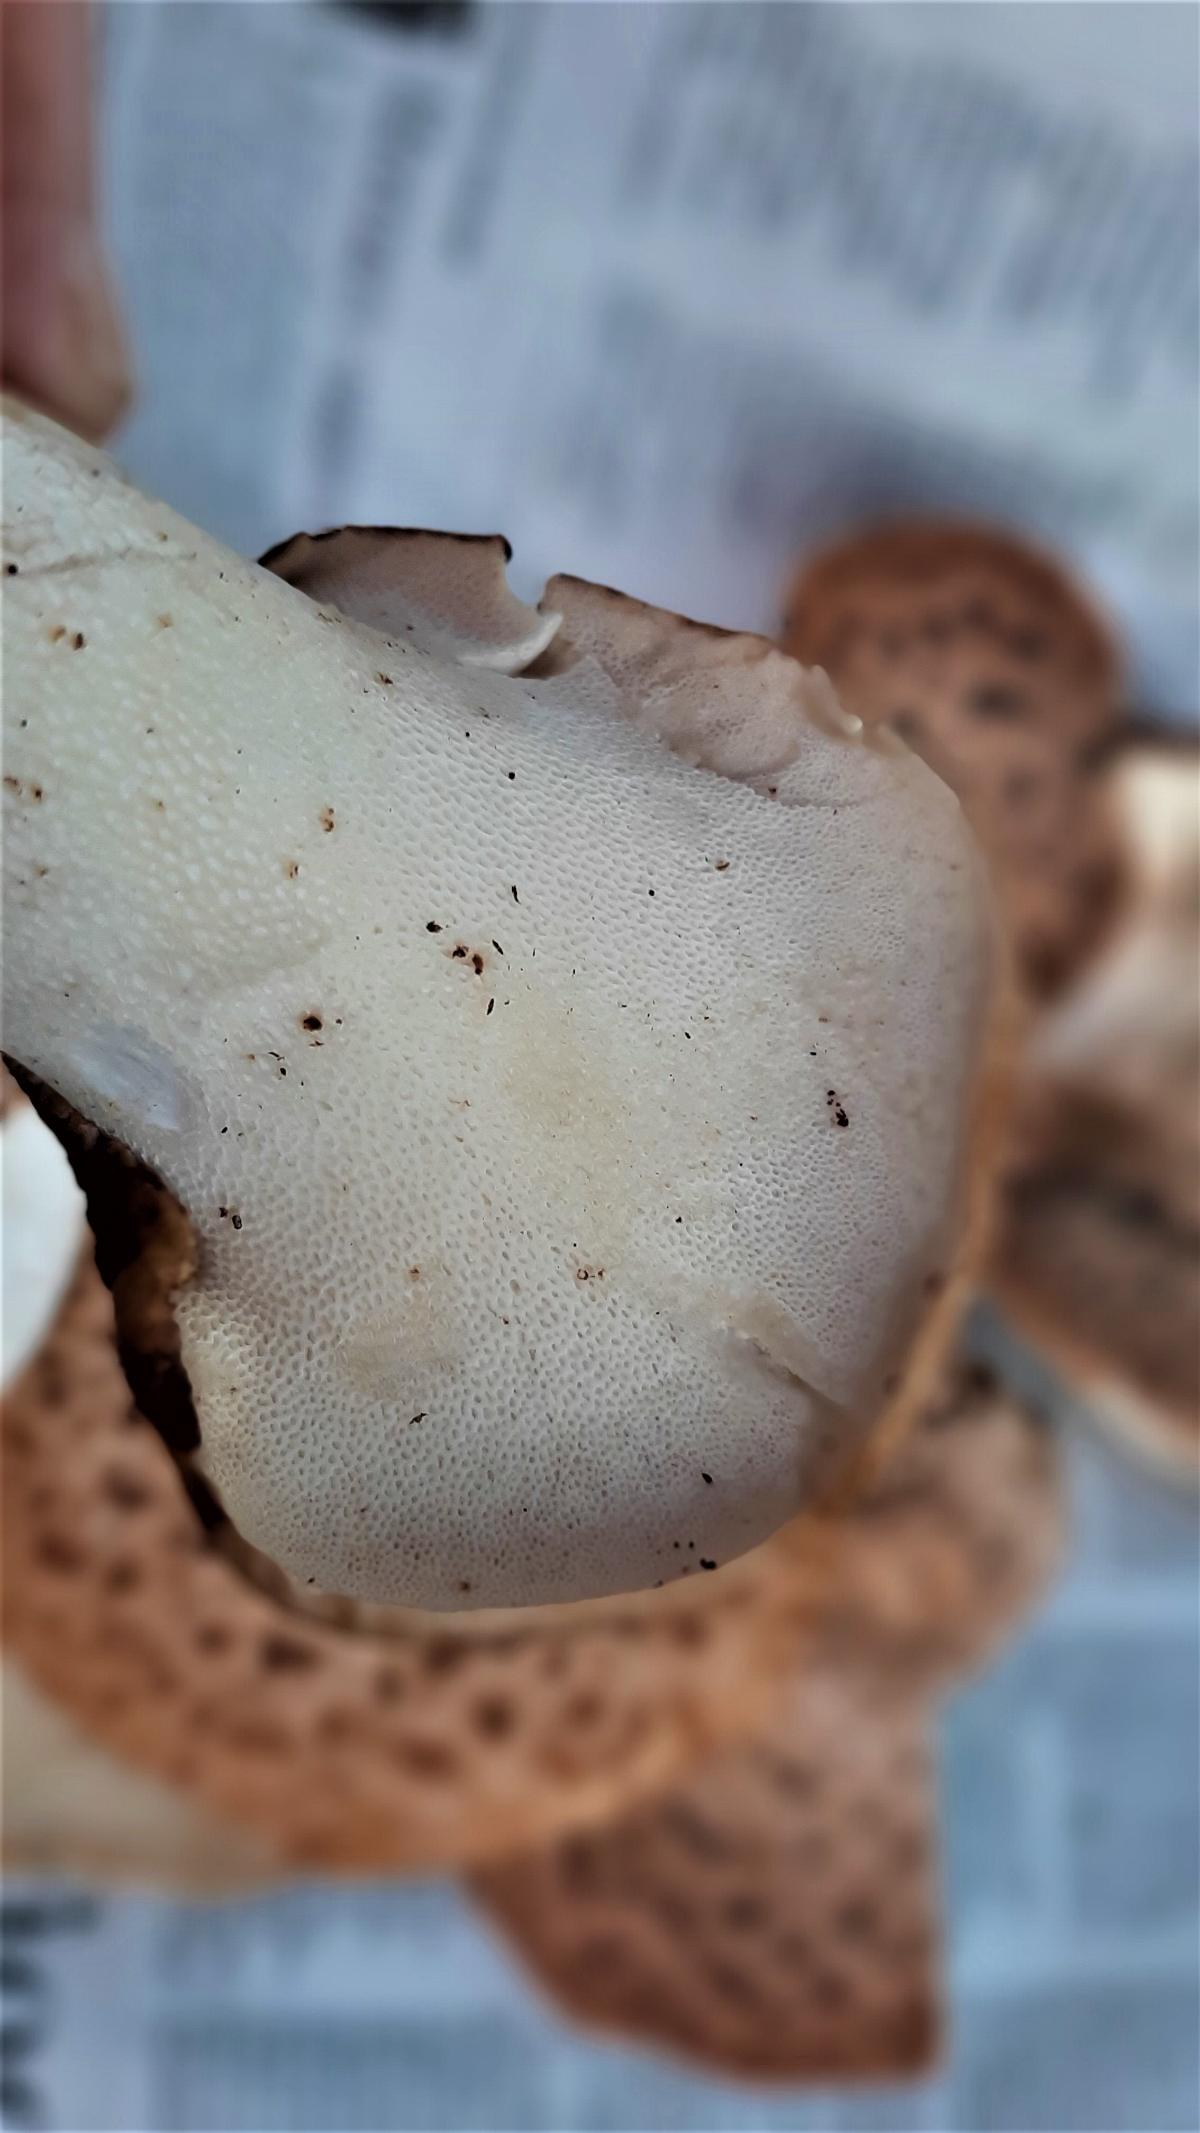 underside of a dryad saddle mushroom - tight white pores